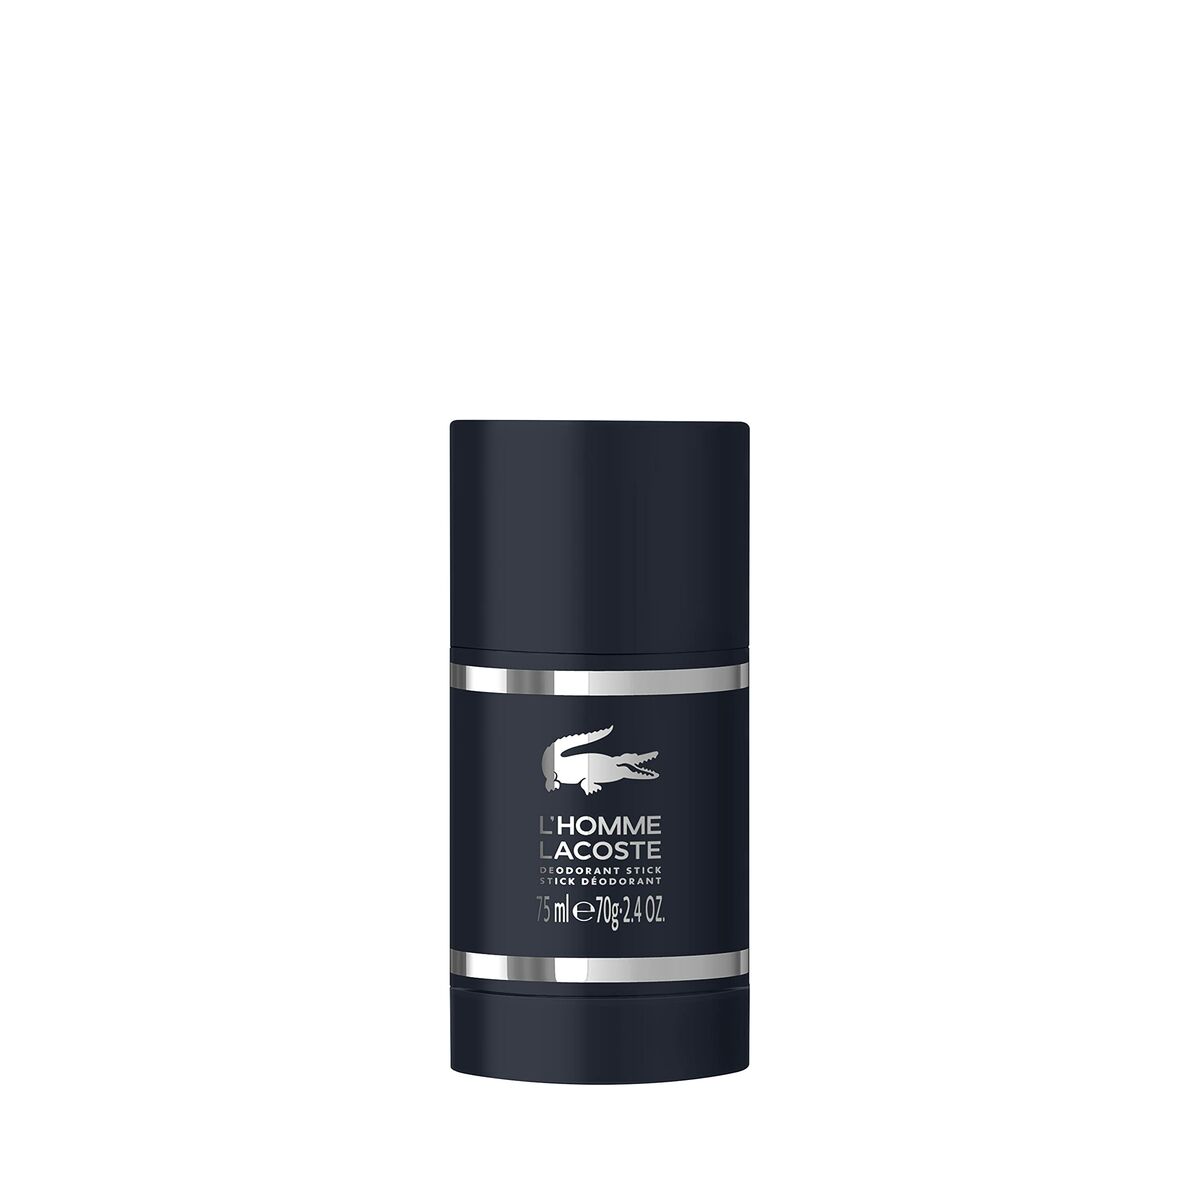 Stick Deodorant Lacoste 75 ml L'Homme Lacoste-0